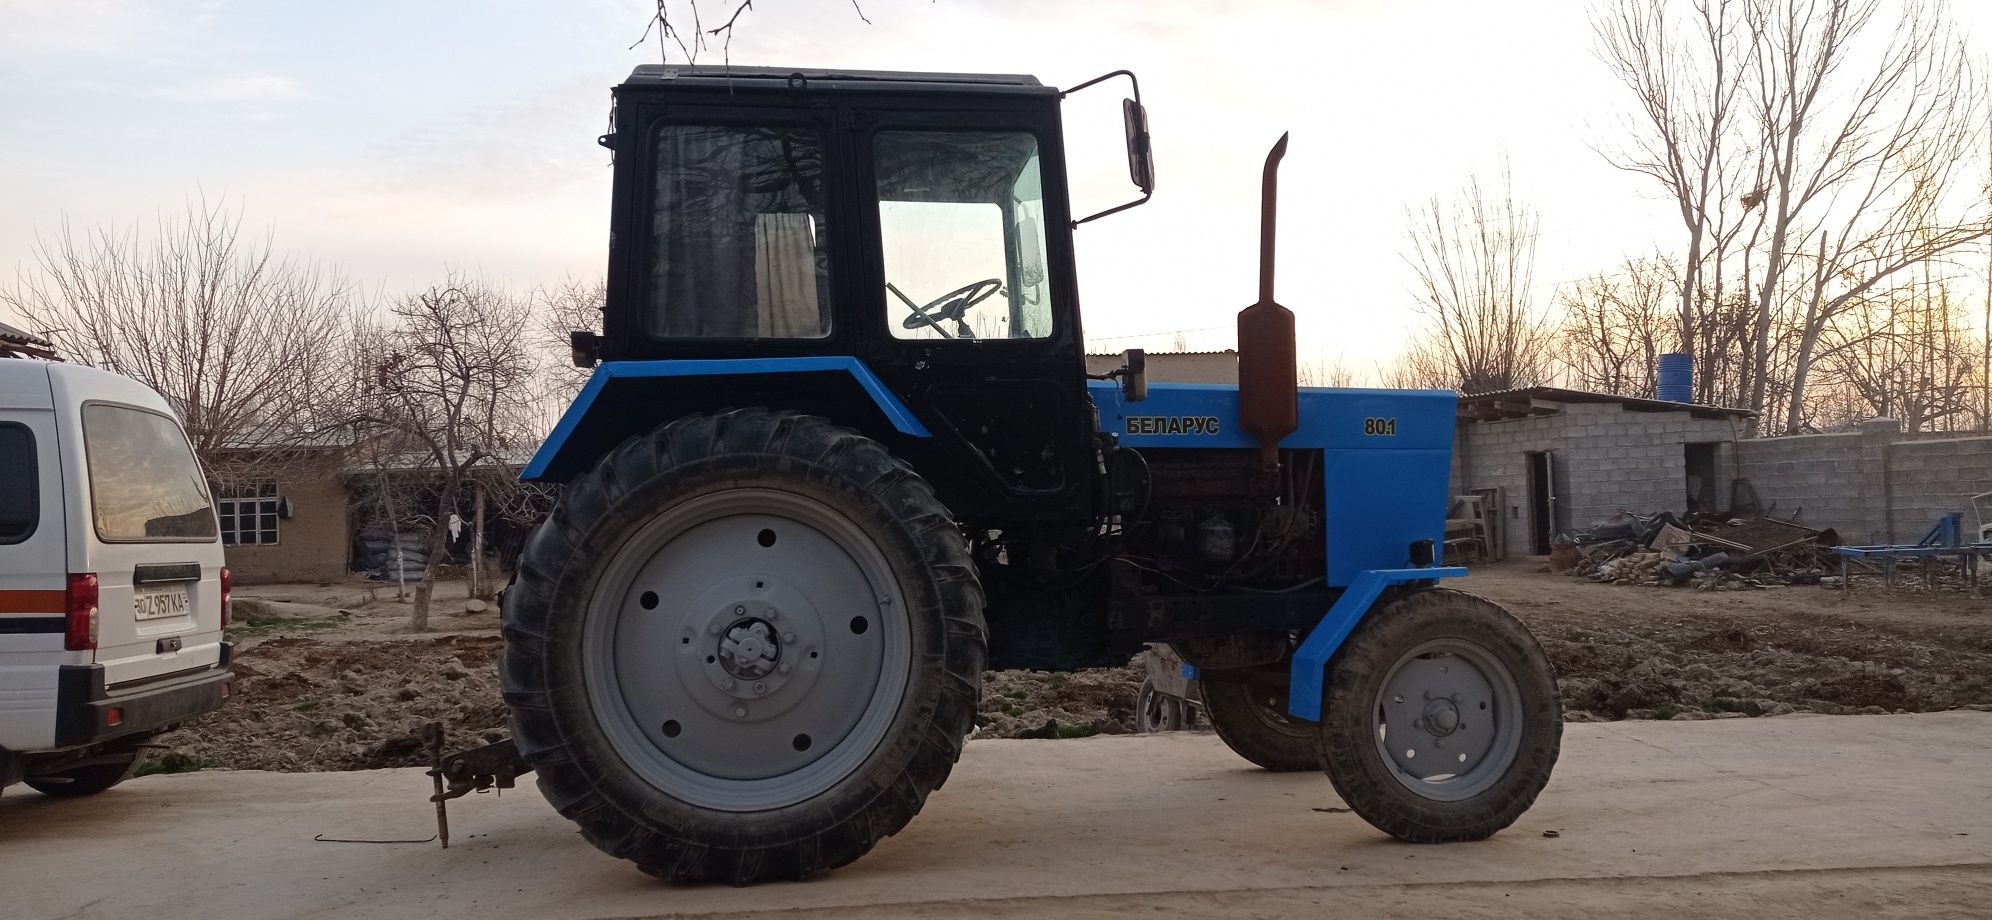 Mtz belarus traktor sotiladi